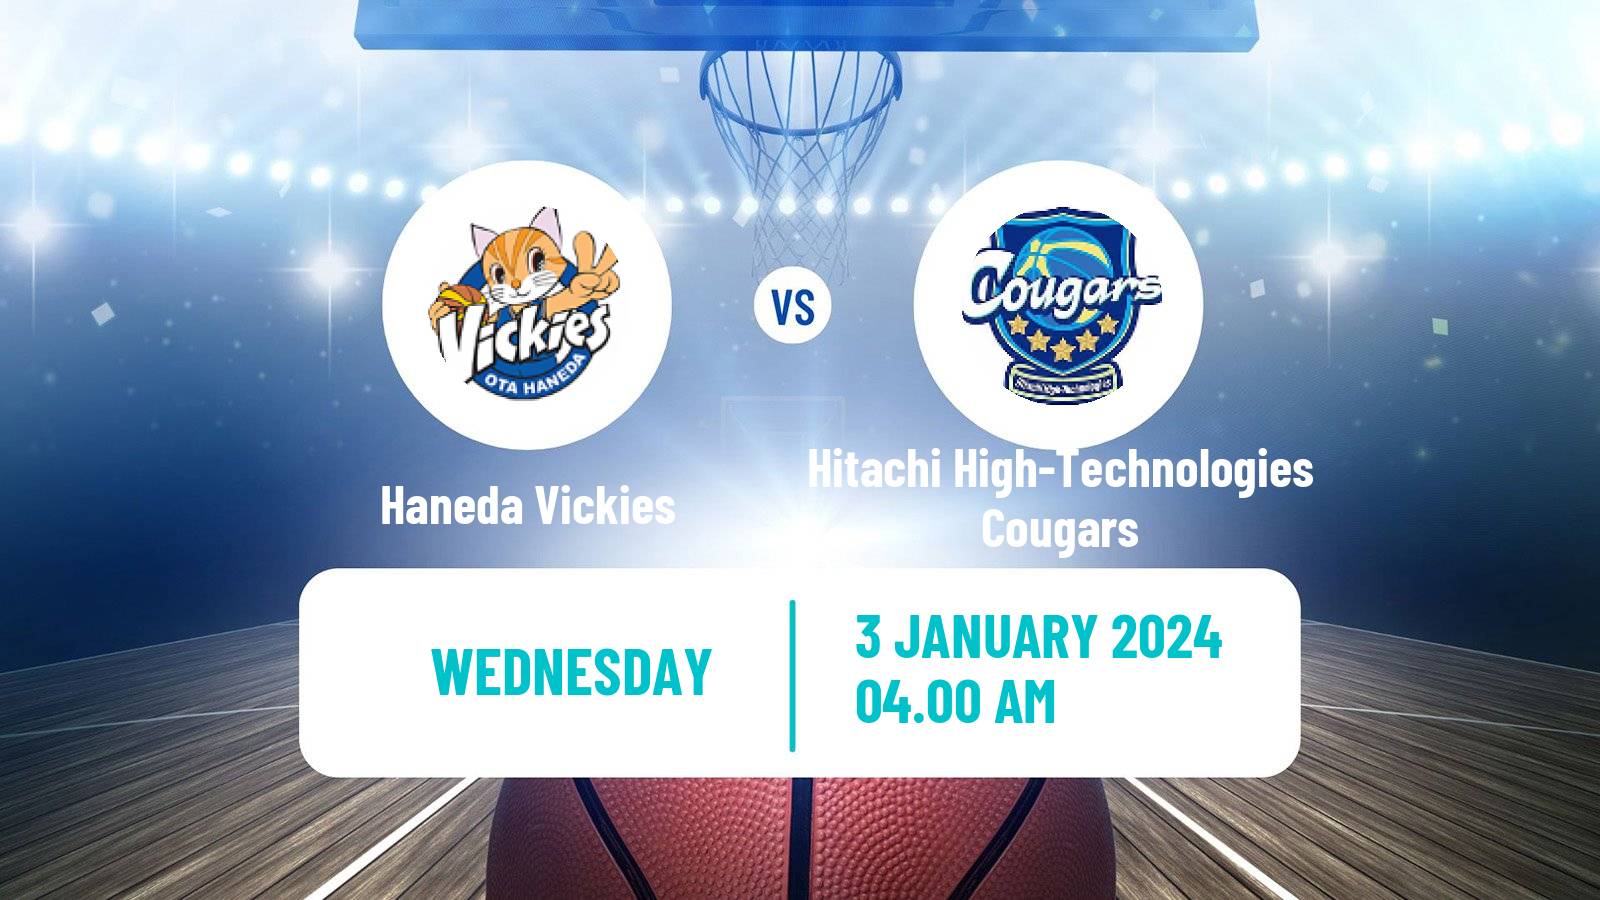 Basketball Japan W League Basketball Haneda Vickies - Hitachi High-Technologies Cougars